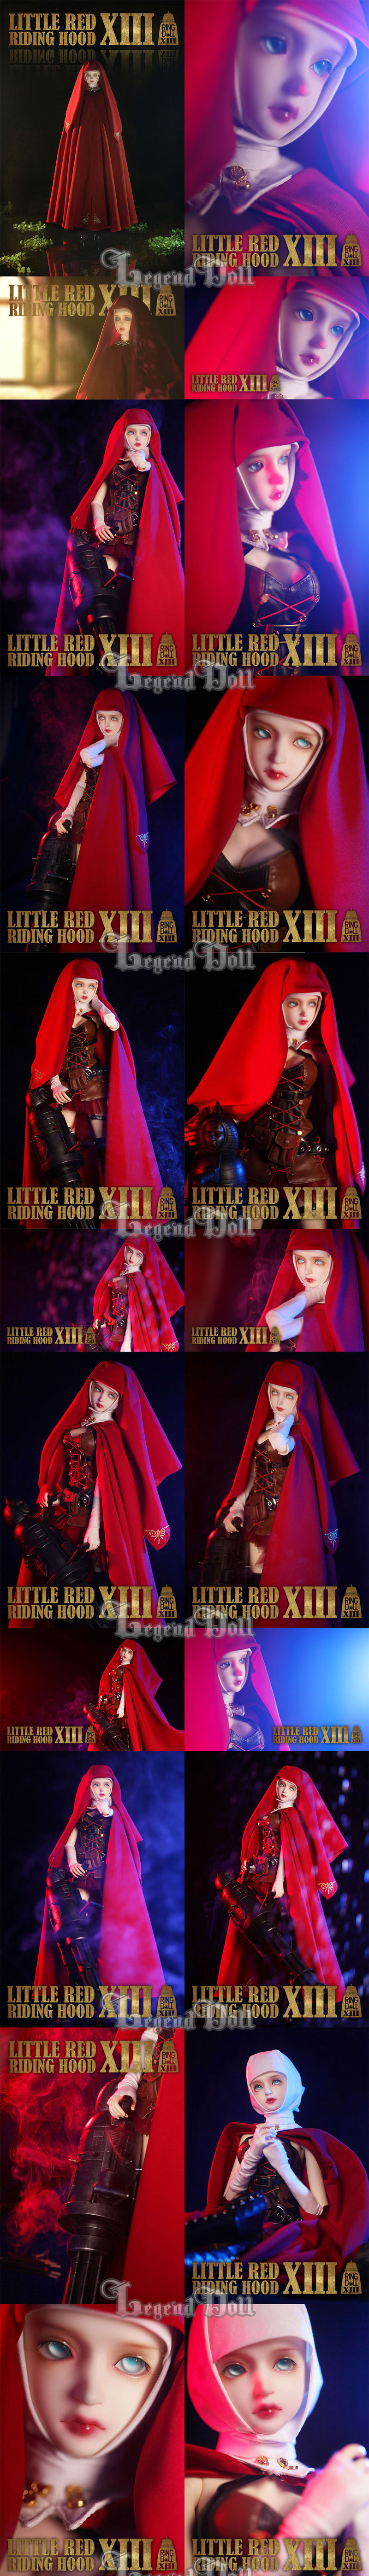 BJD Little Red Riding Hood Girl 59cm Ball-jointed Doll